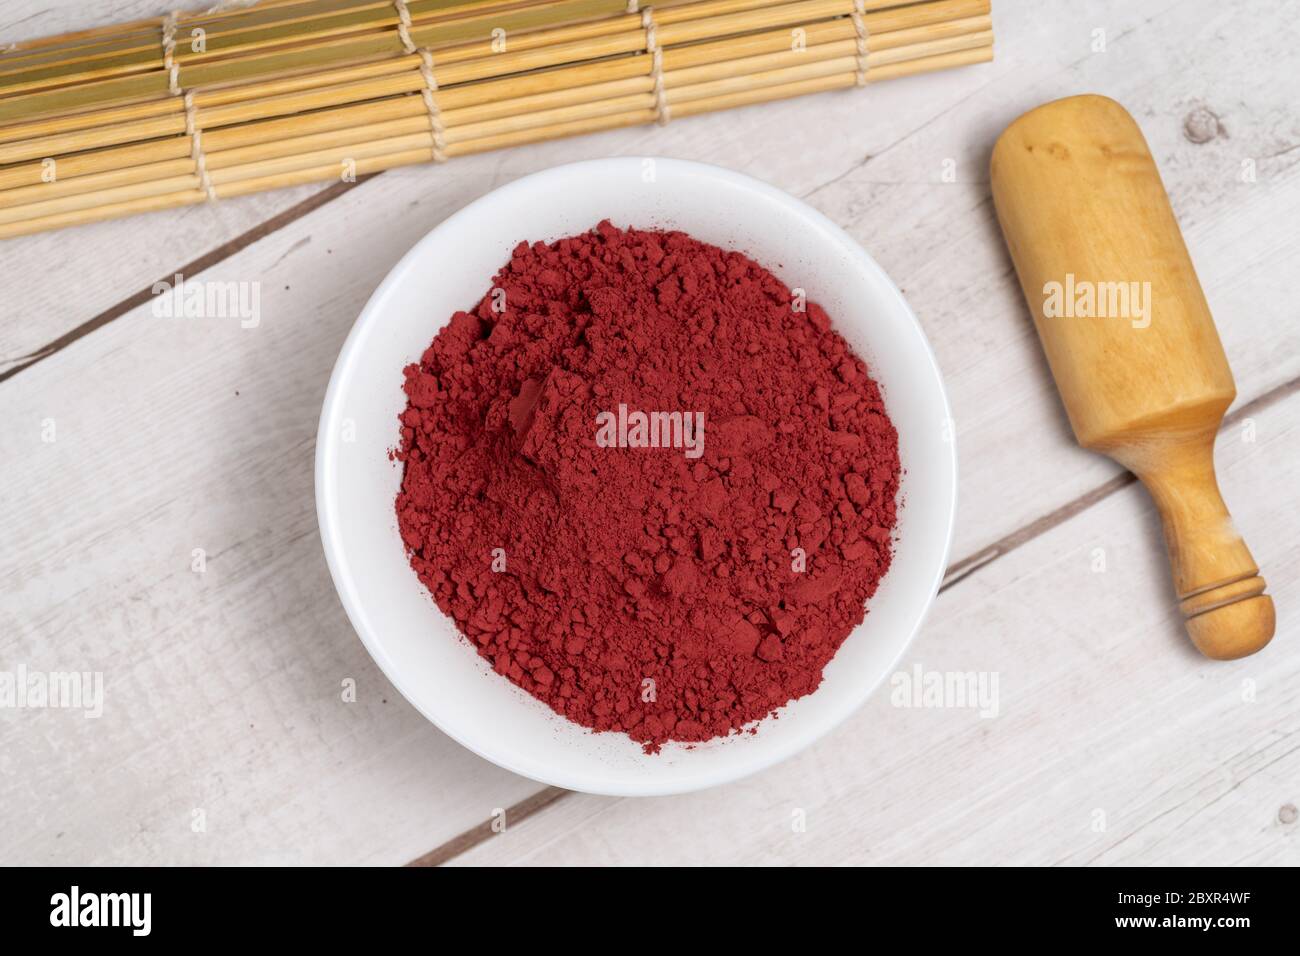 Red yeast rice powder or angkak Stock Photo